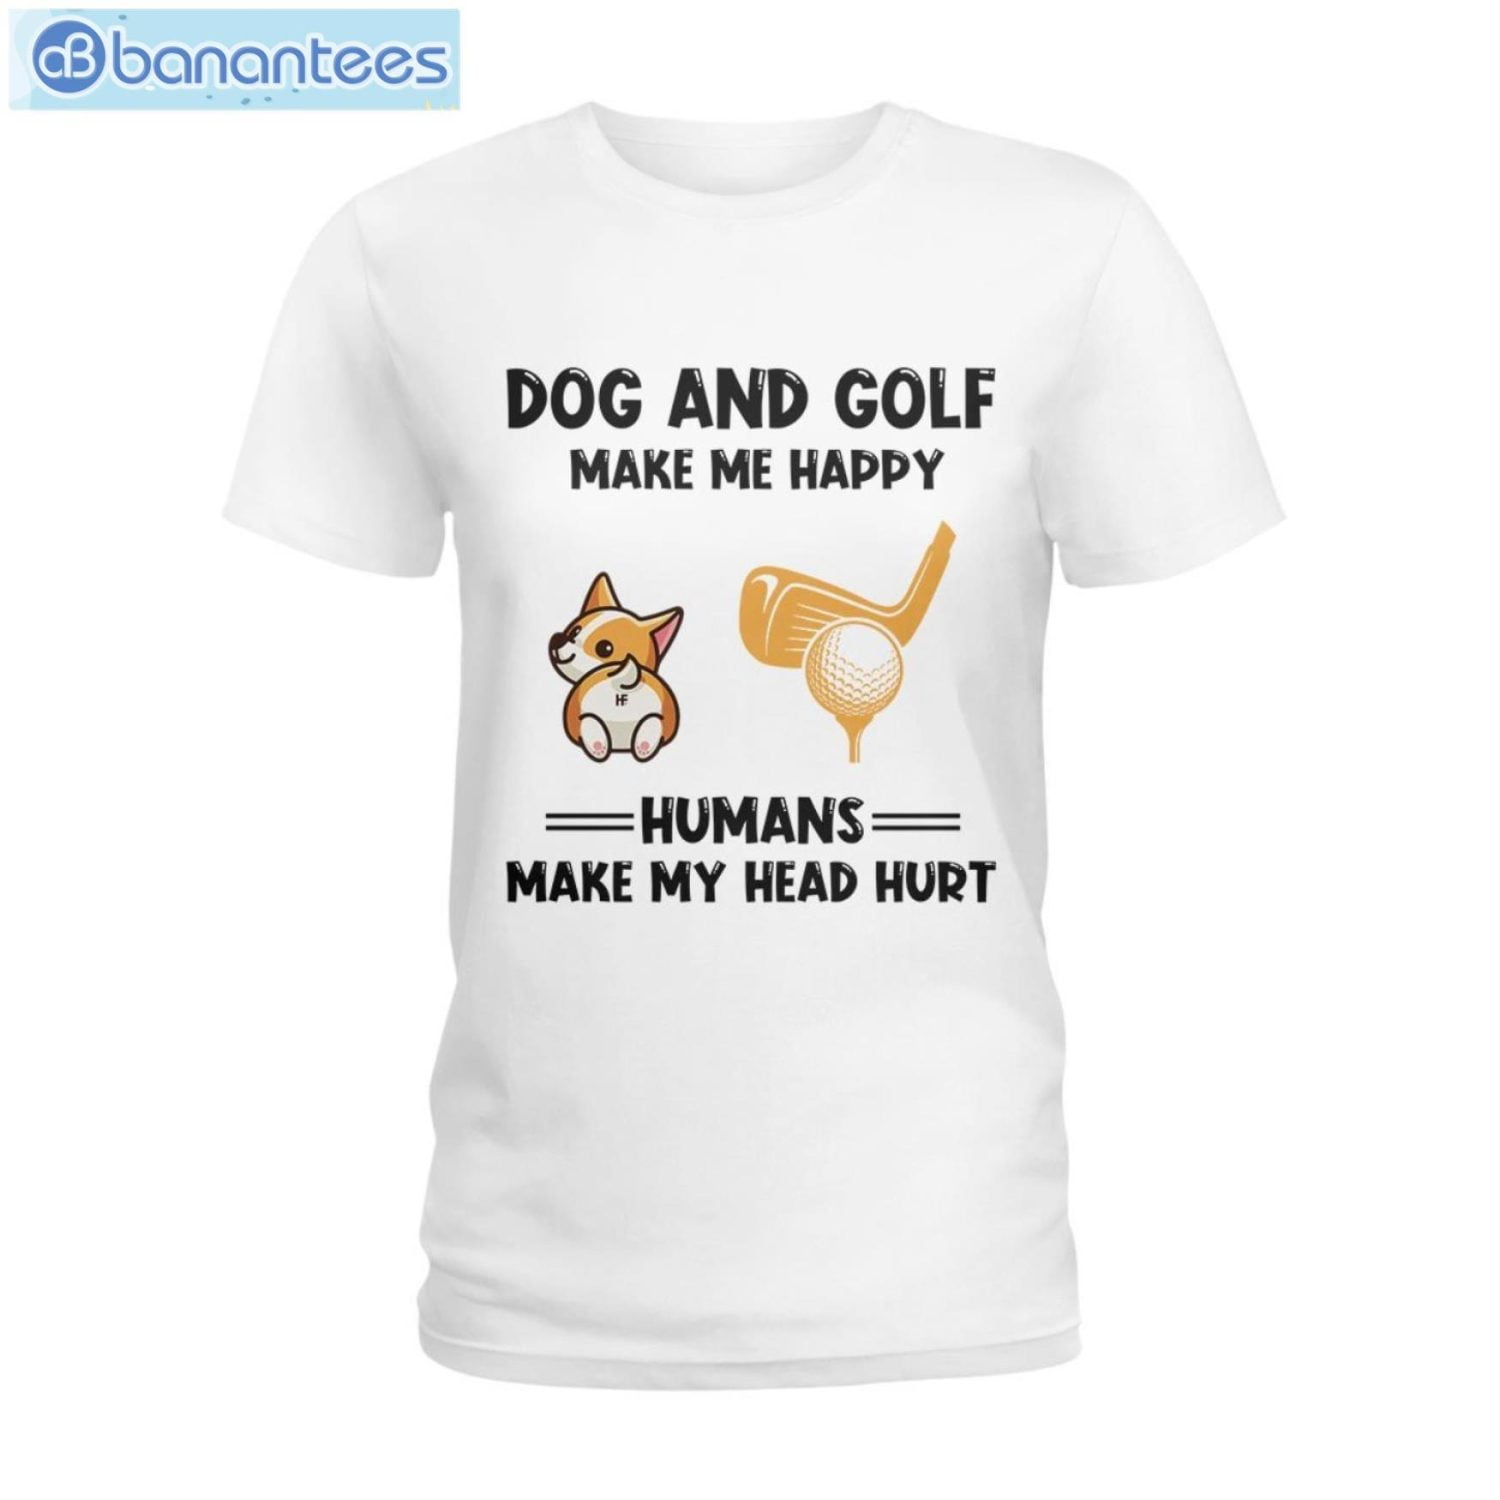 Dogs And Golf Make Me Happy Human Make Me Head Hurt T-Shirt Long Sleeve Tee Product Photo 1 Product photo 1